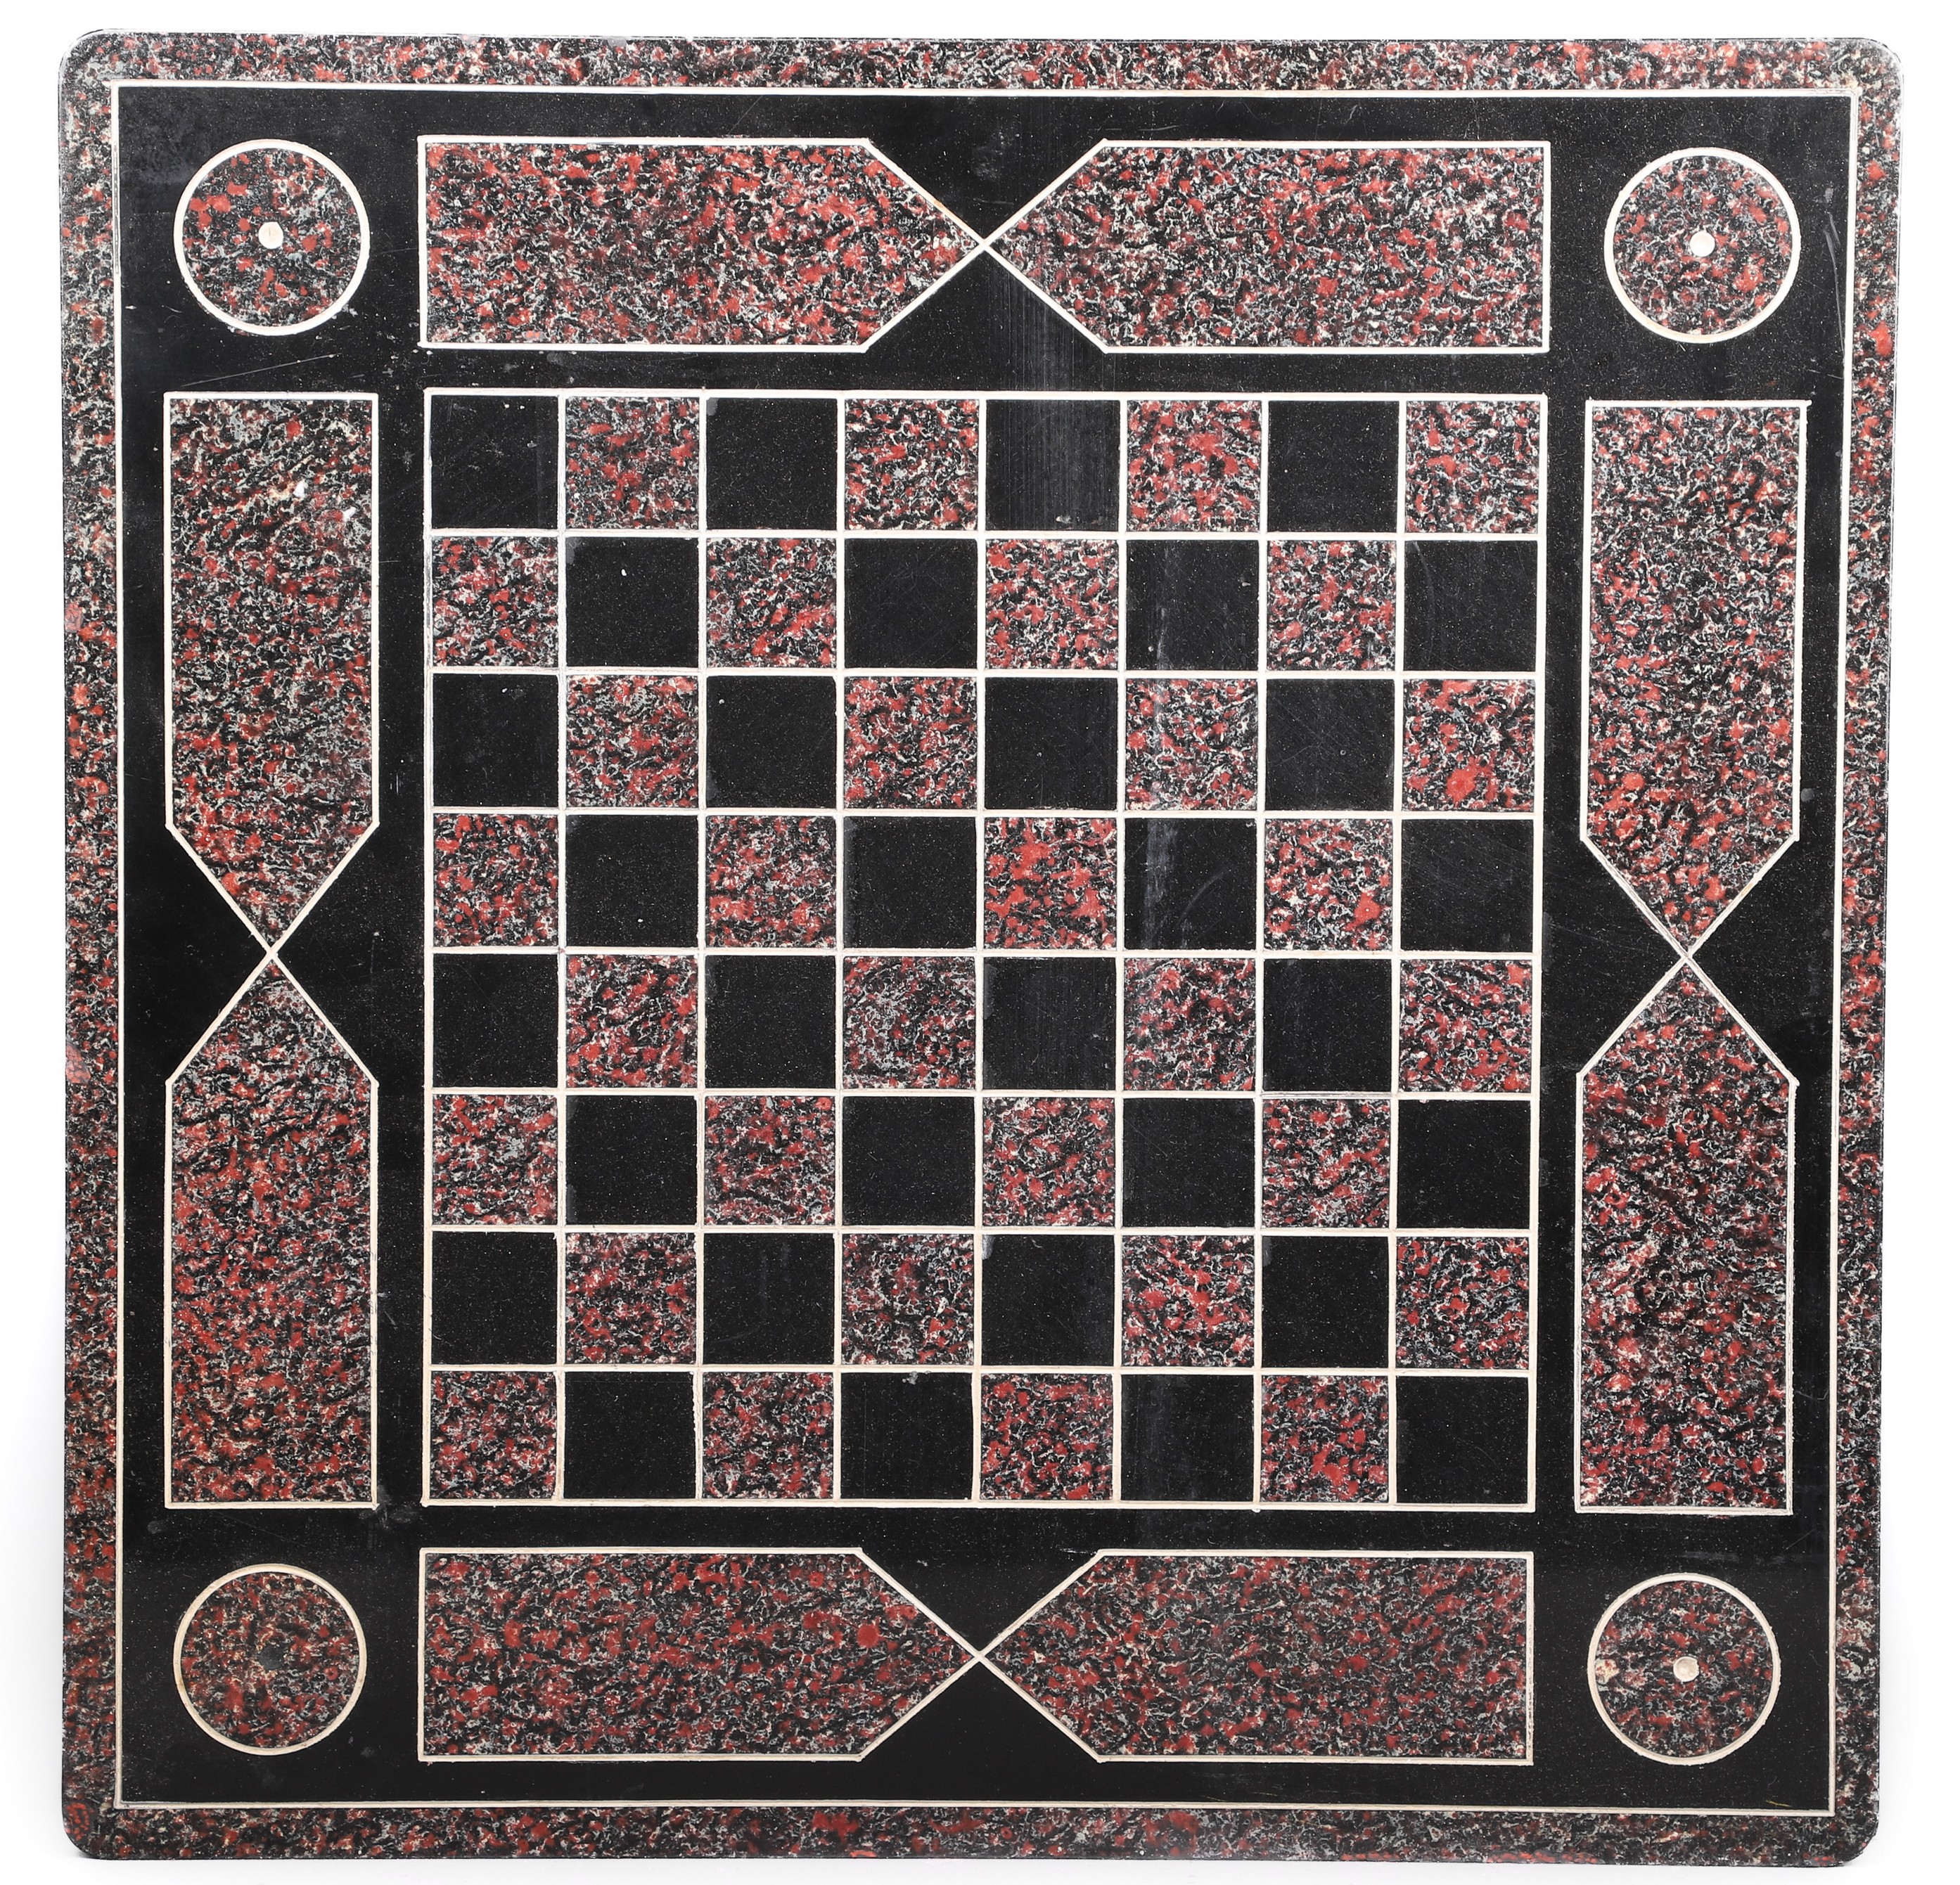 Marbleized slate game board in 27a4c6